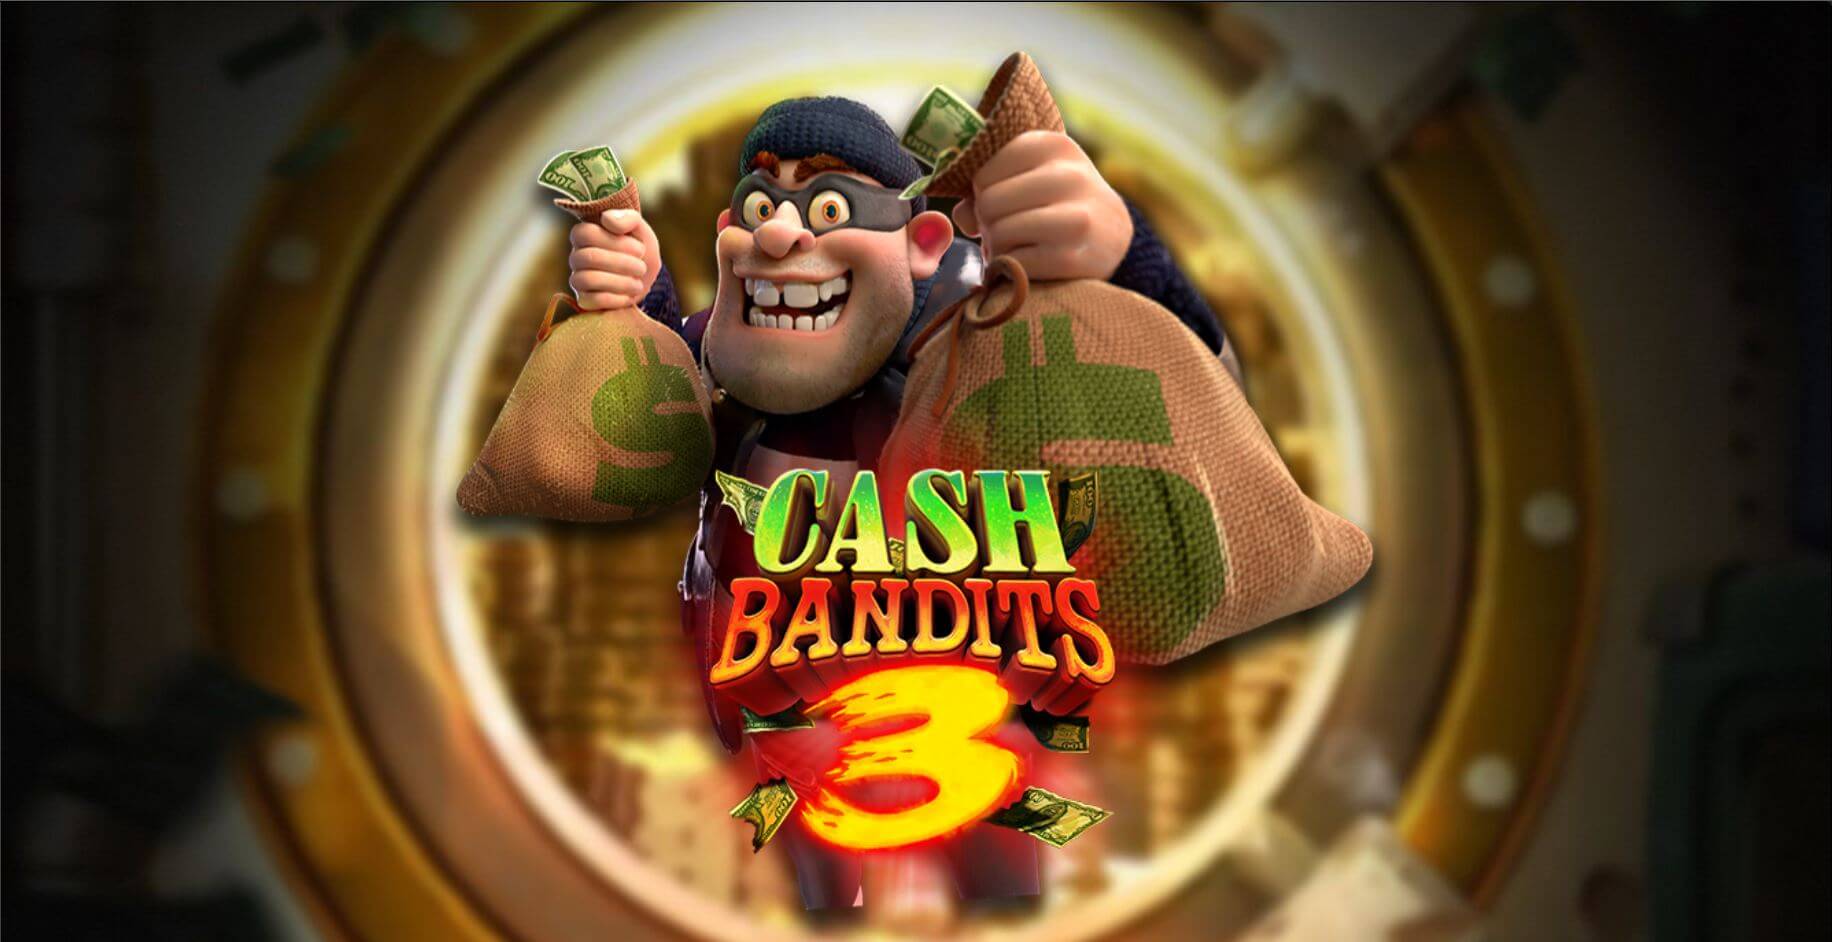 cash bandits  no deposit bonus